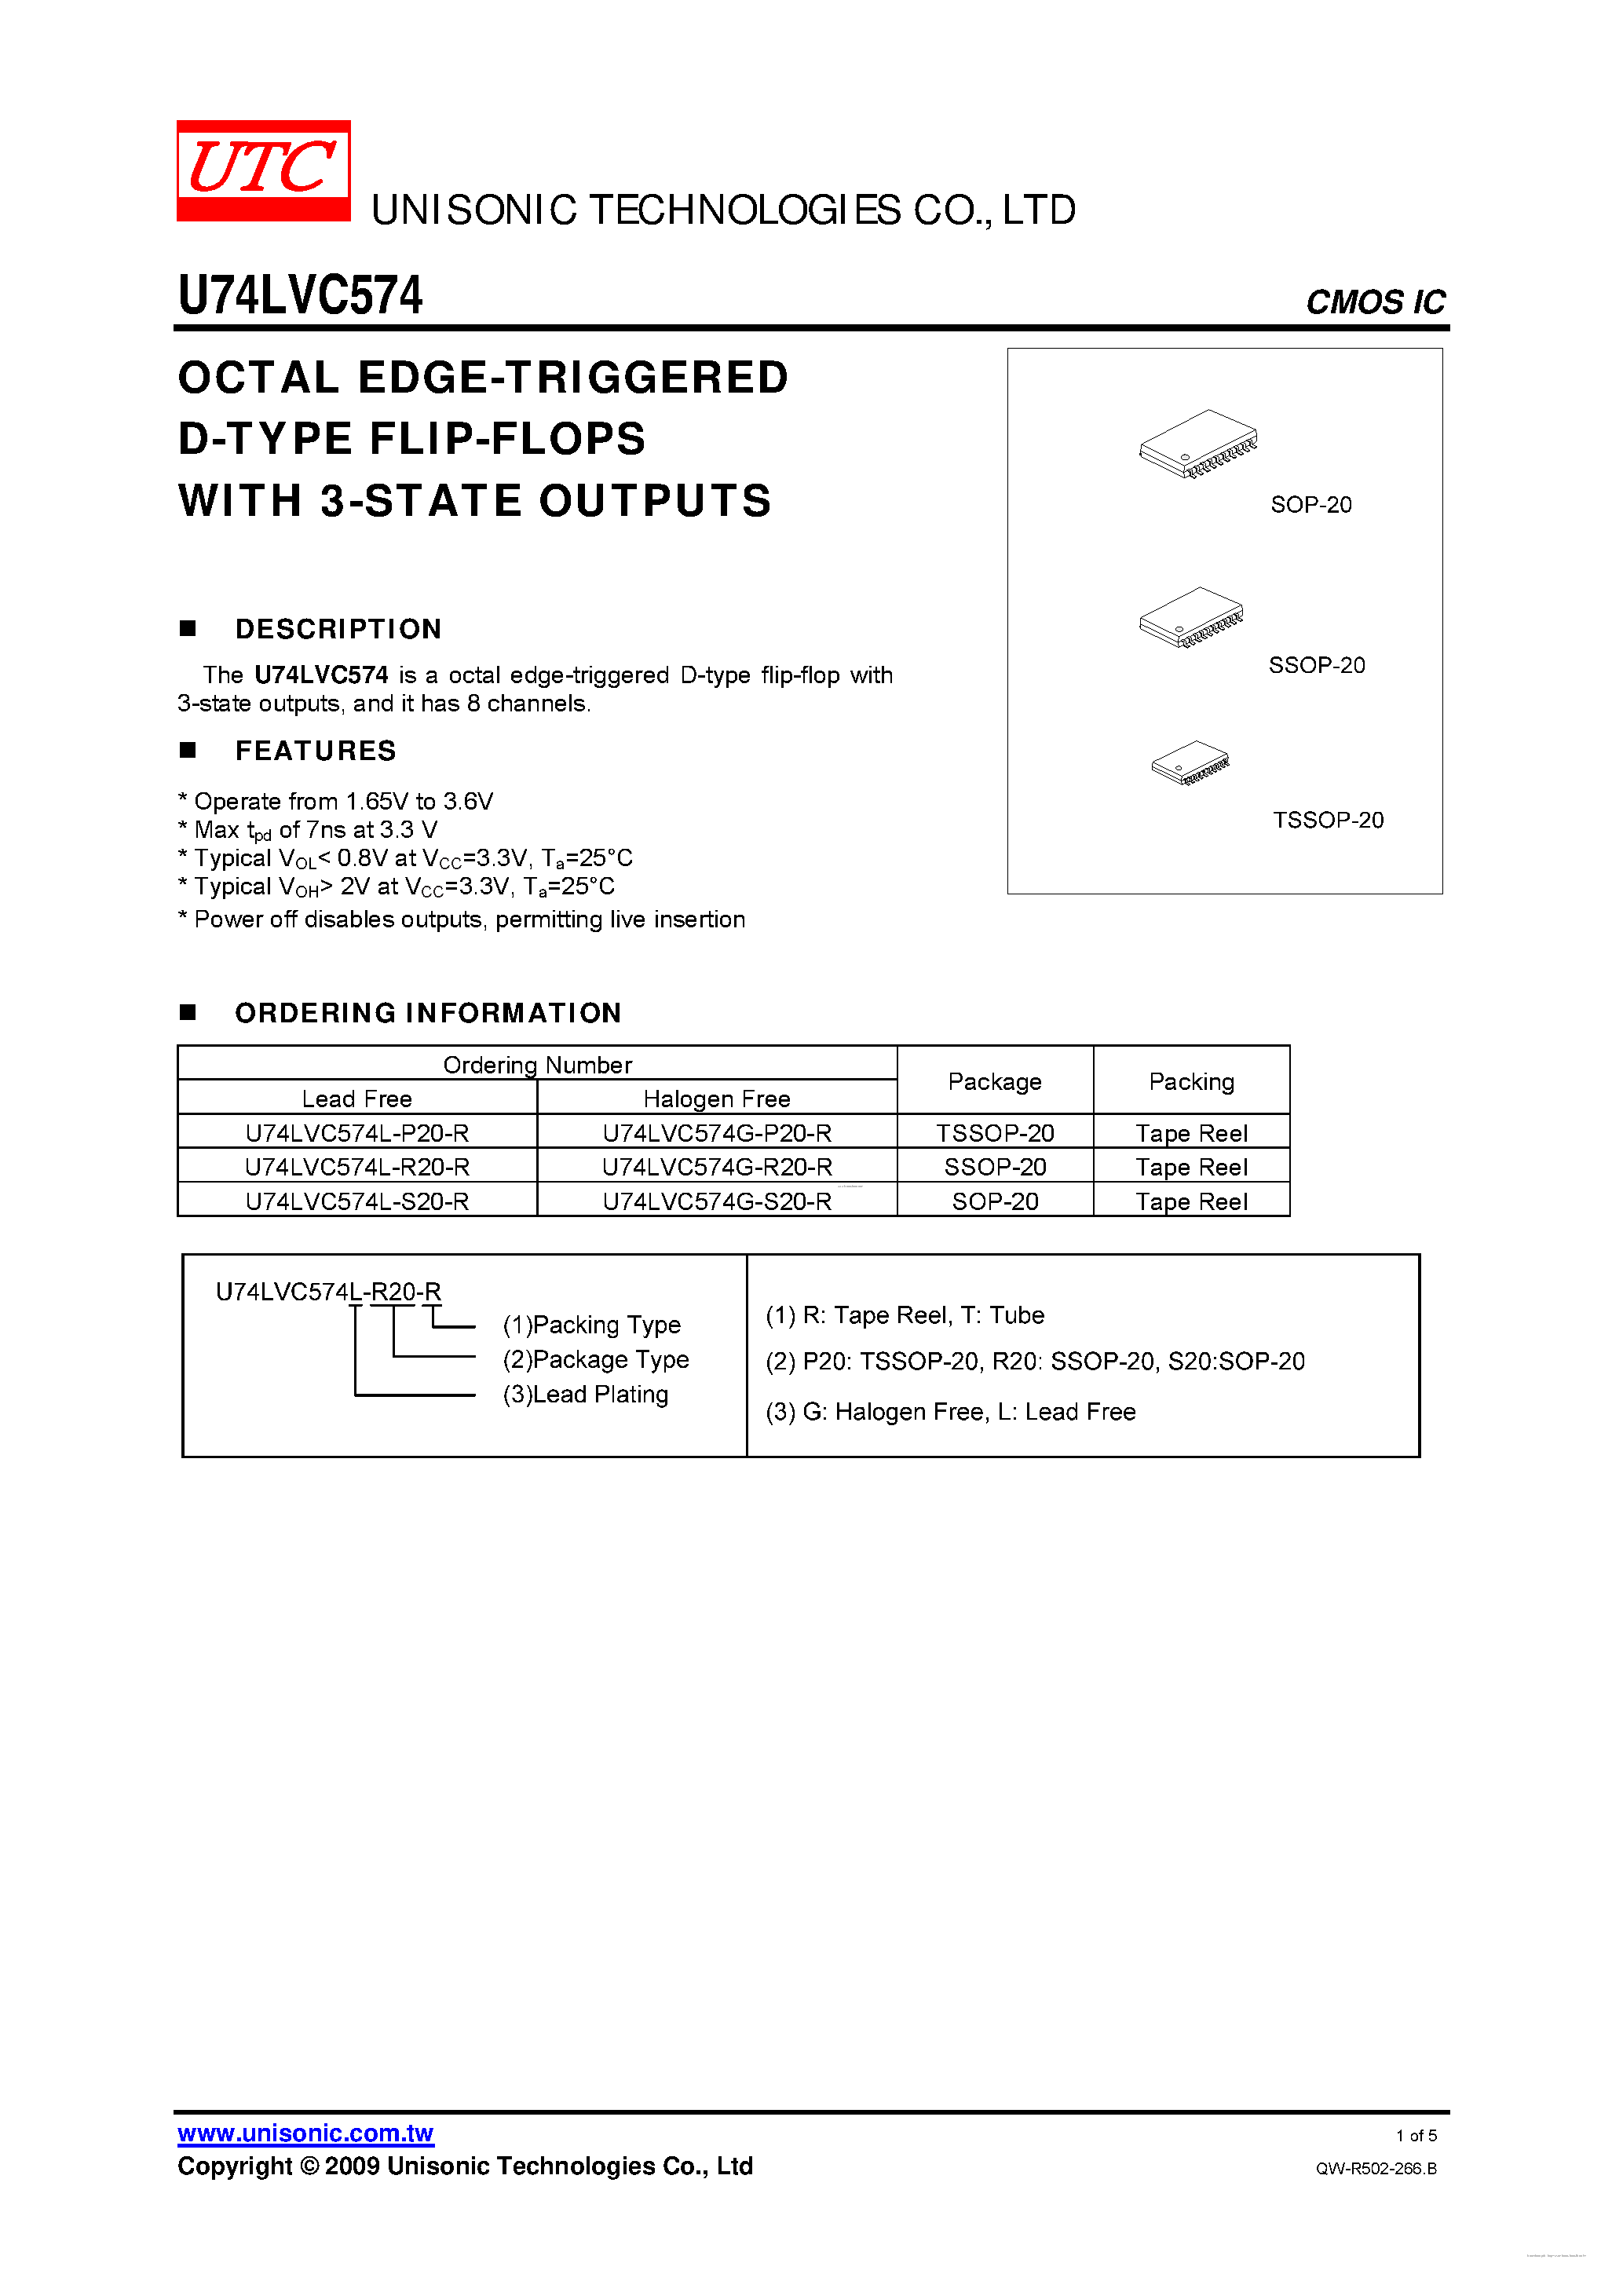 Datasheet U74LVC574 - OCTAL EDGE-TRIGGERED D-TYPE FLIP-FLOPS page 1